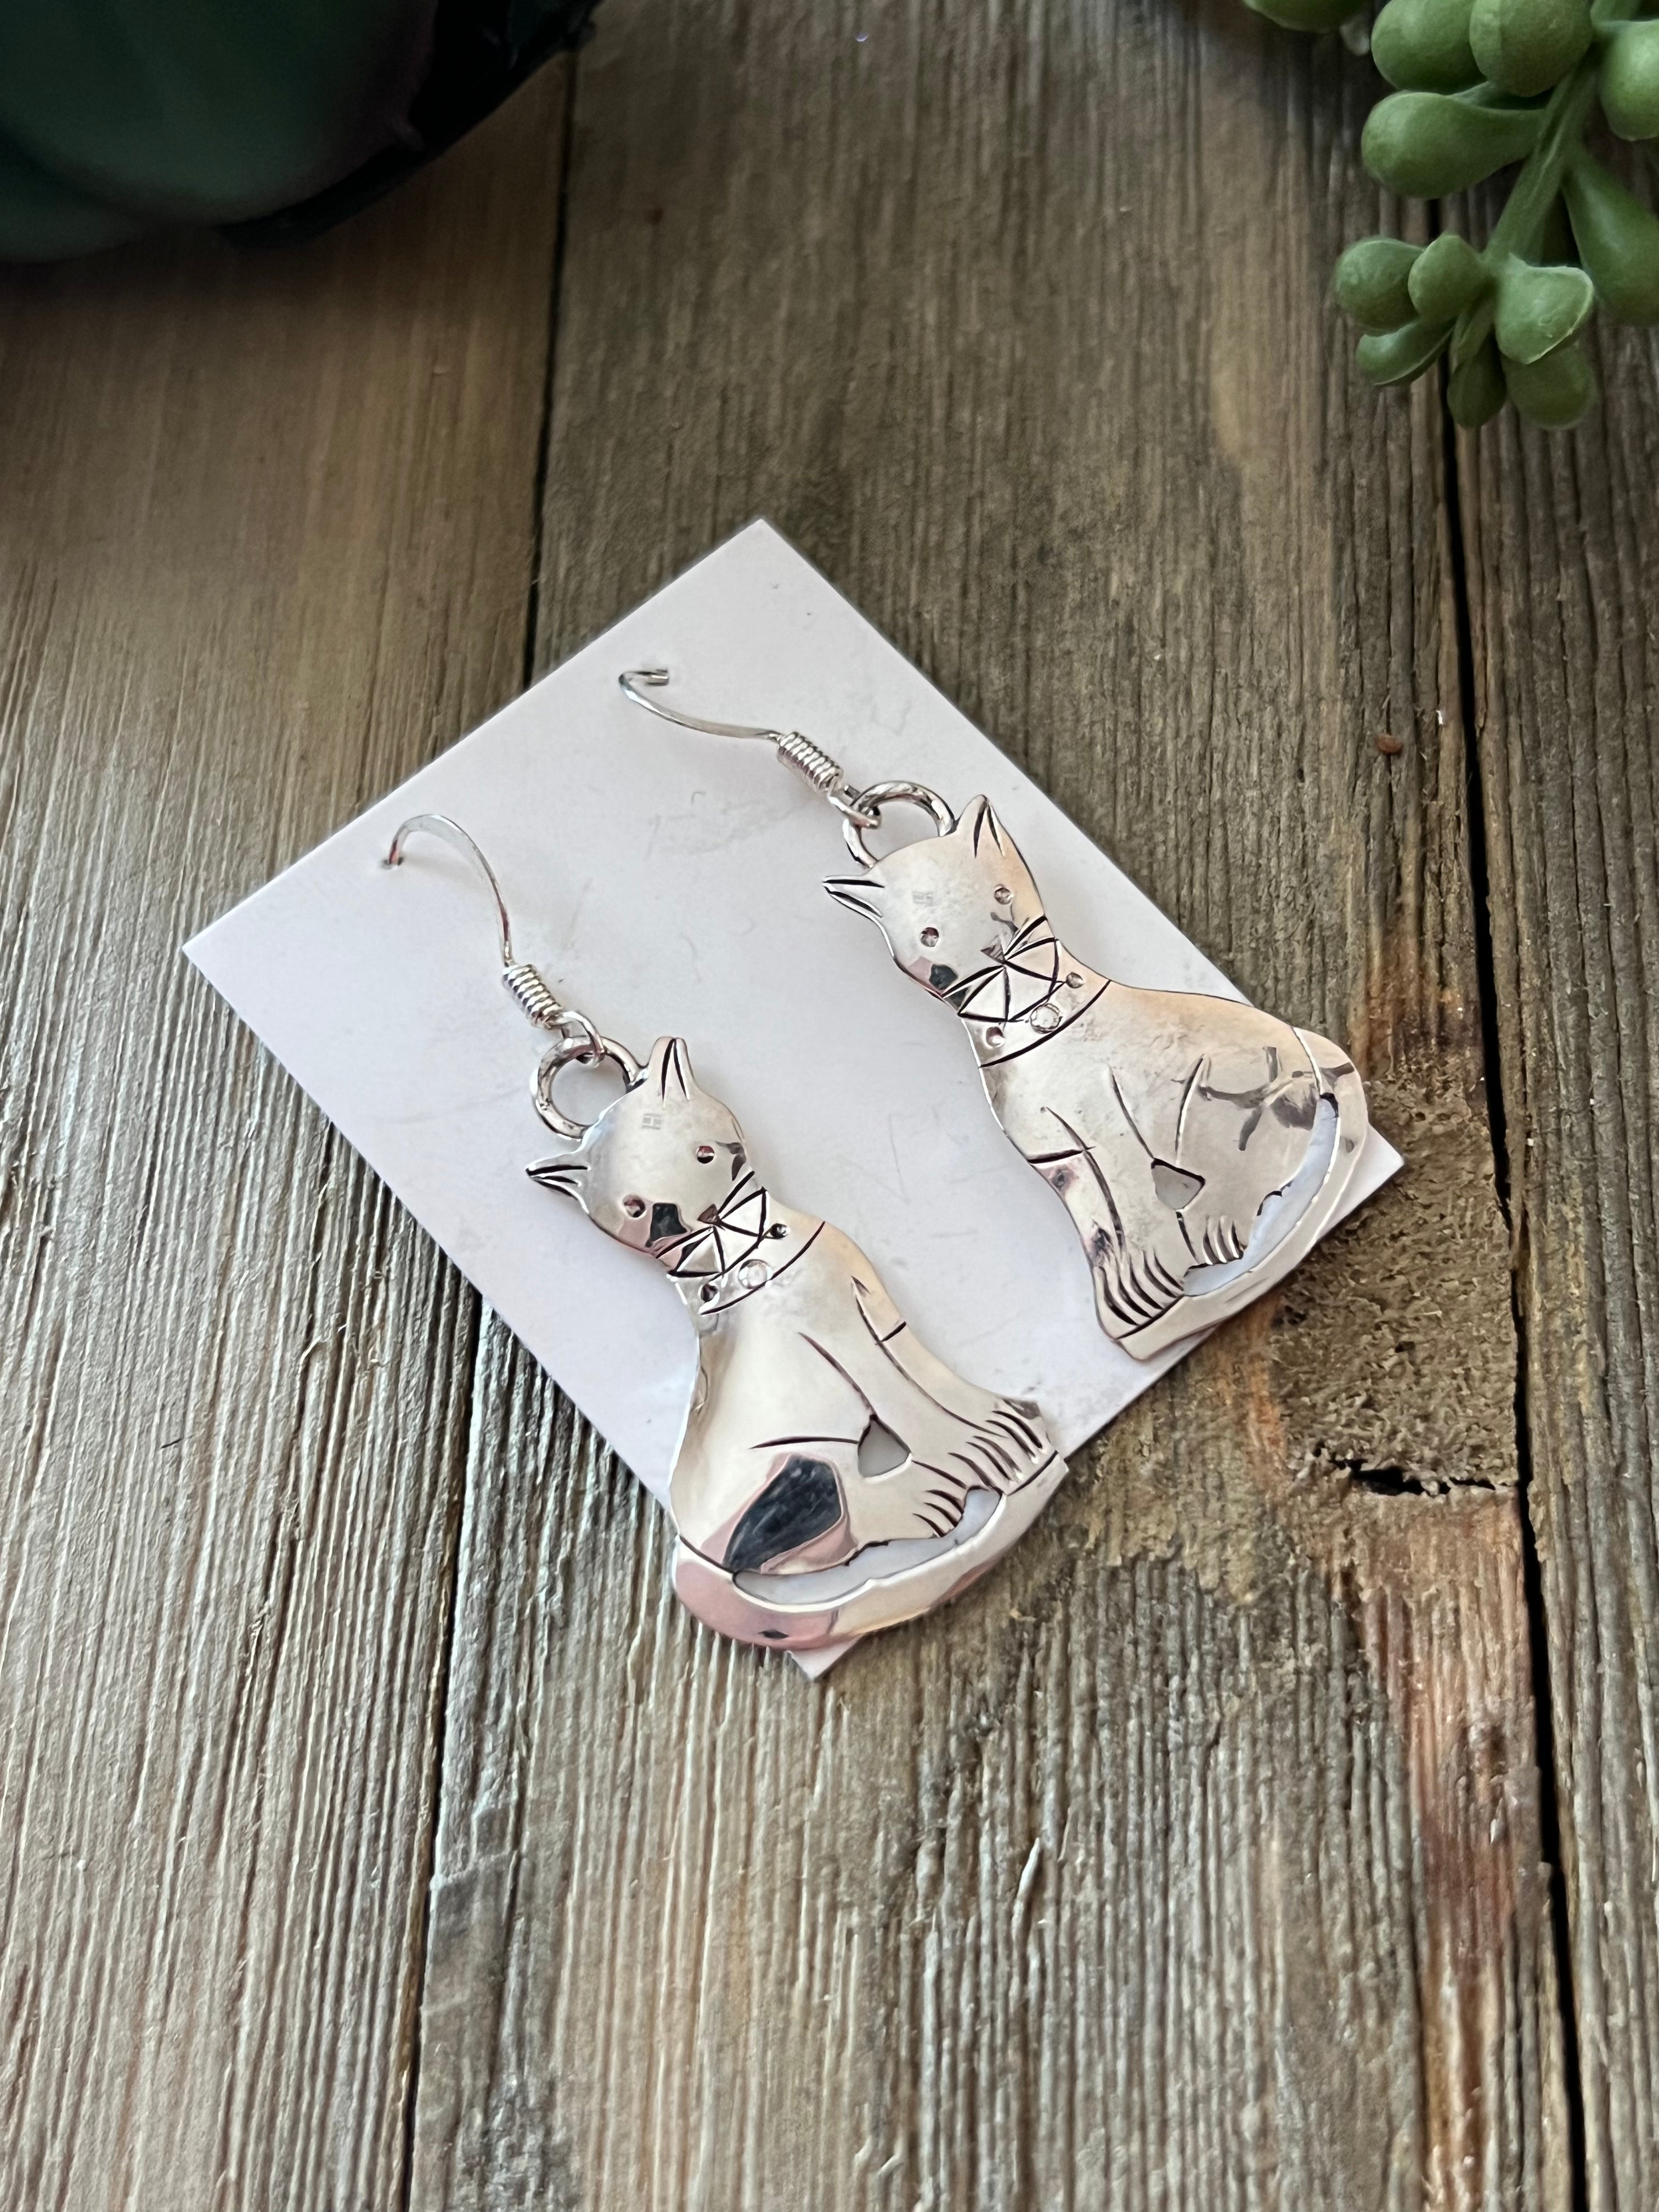 Southwestern Made Sterling Silver Cat Dangle Earrings